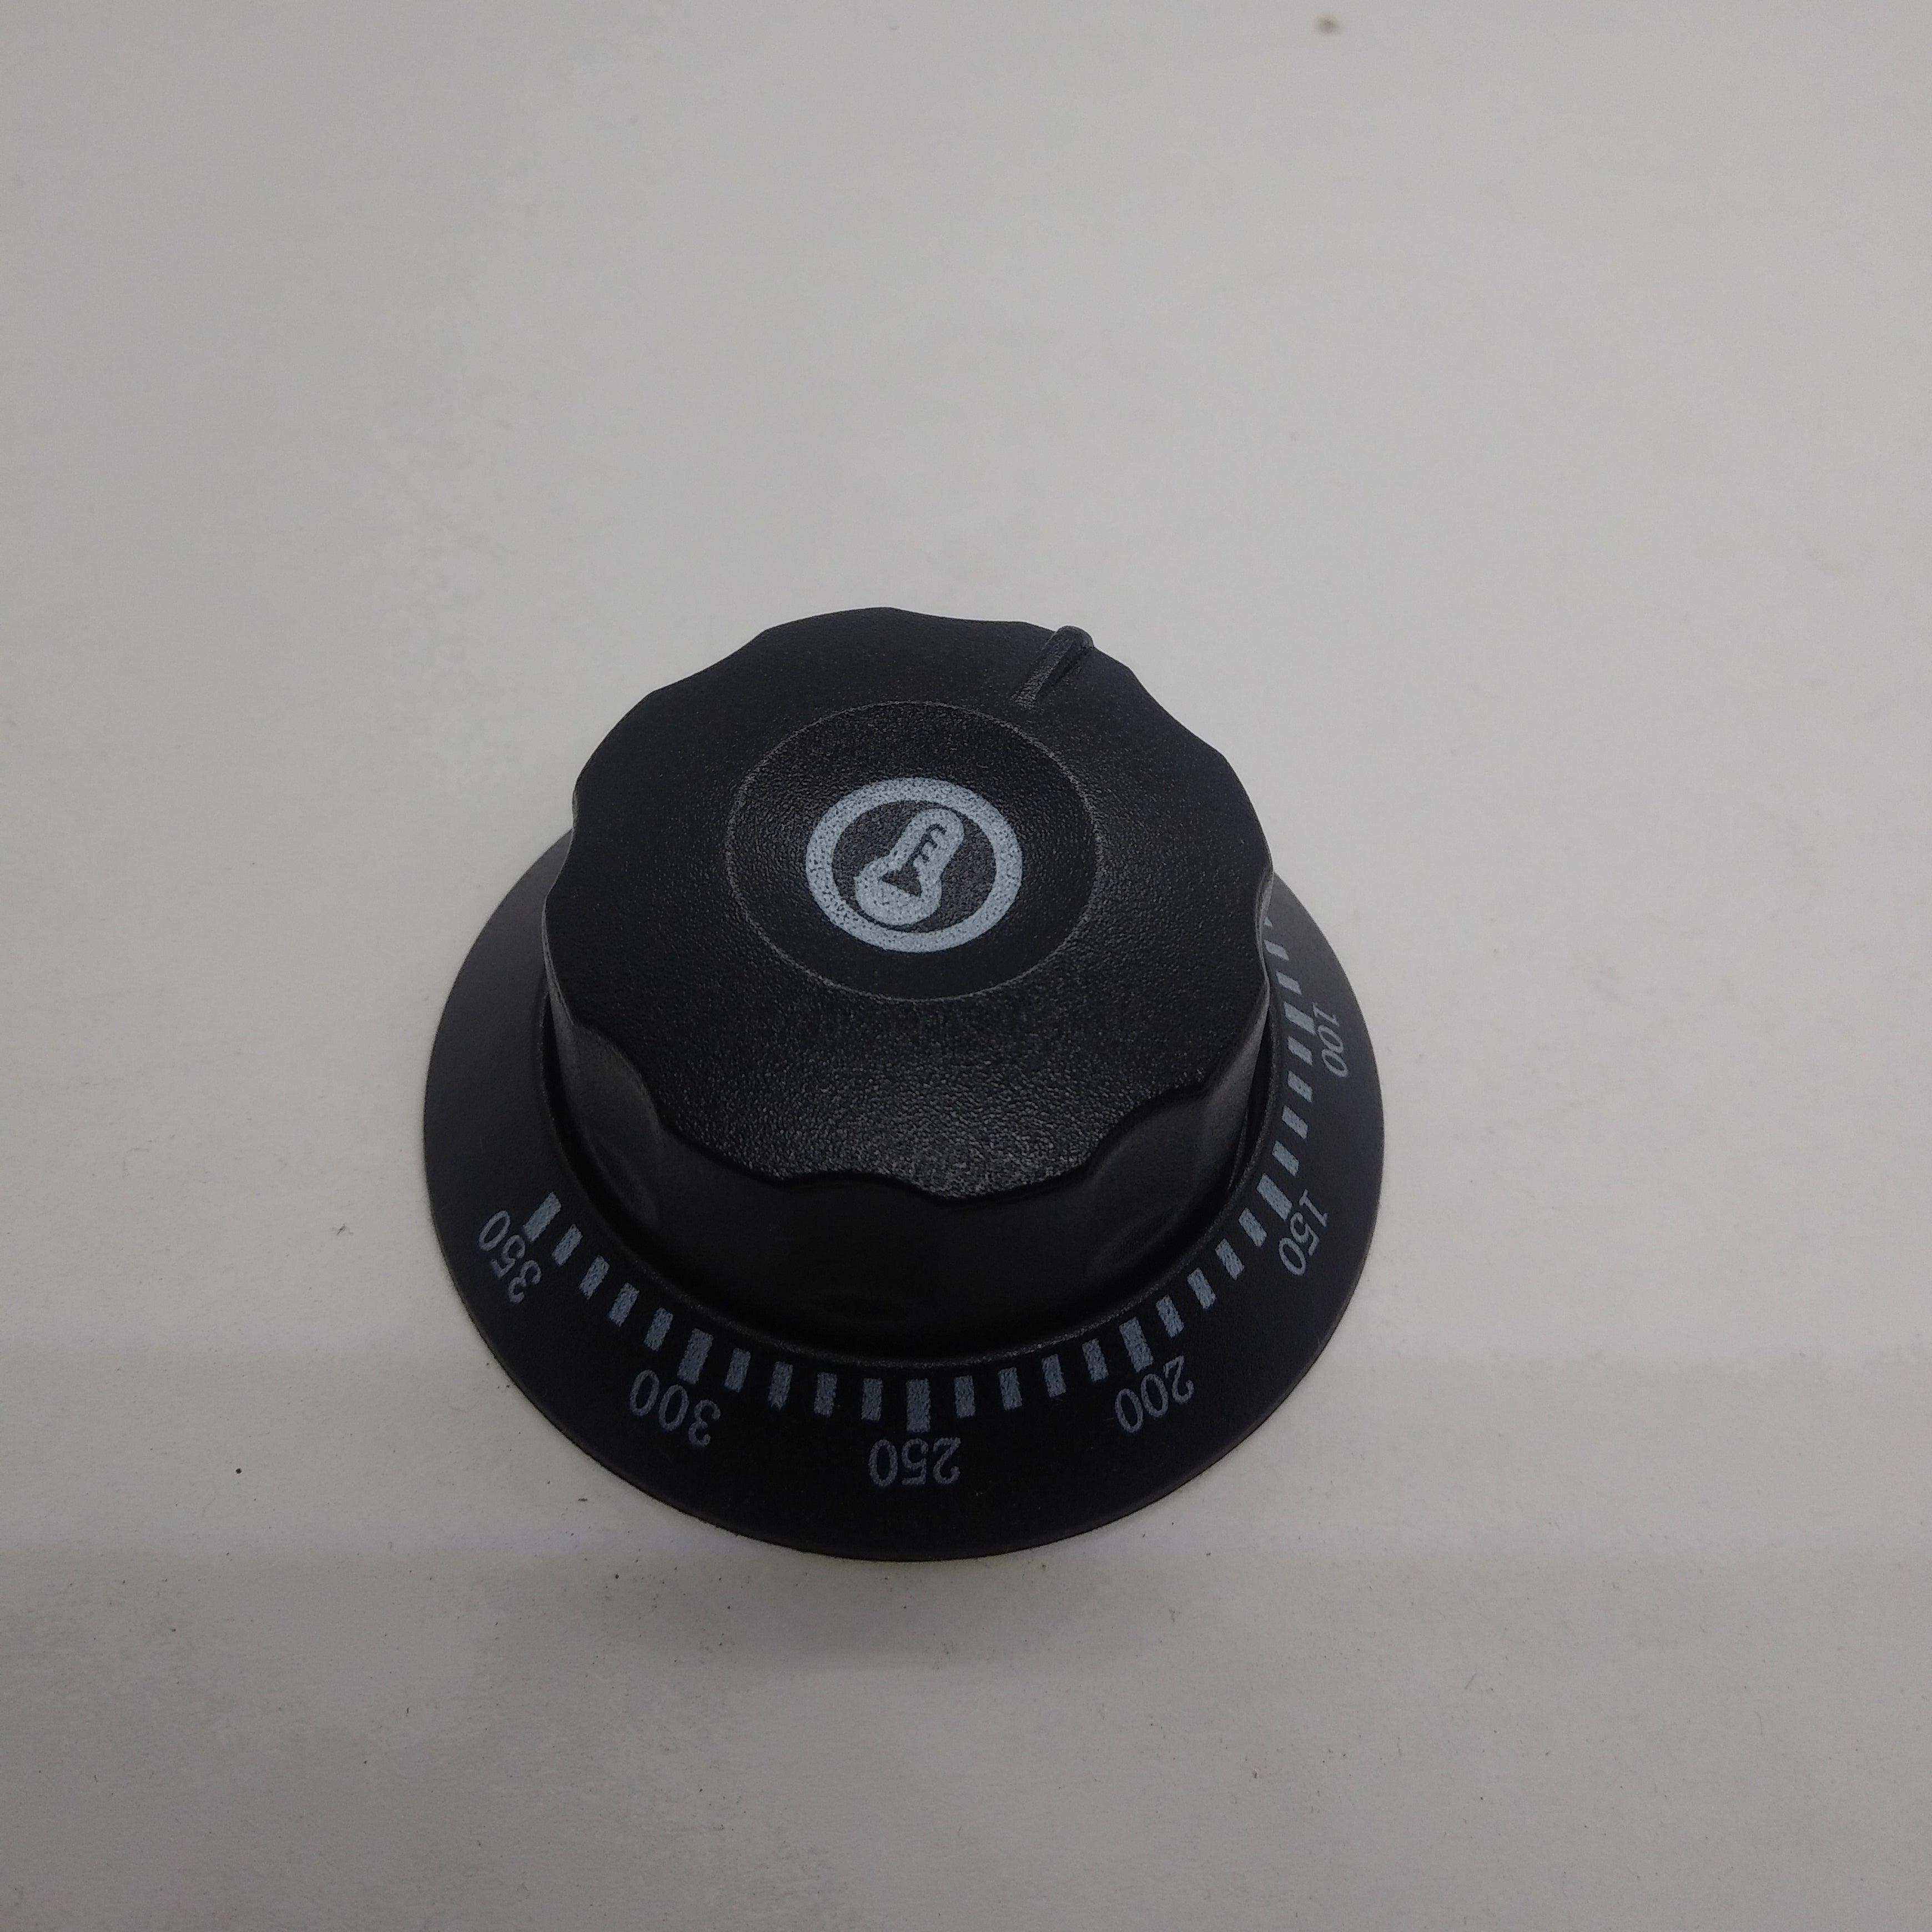 RMOR264 - Black knob for Moretti Forni P.131/45M10 - AMPTO